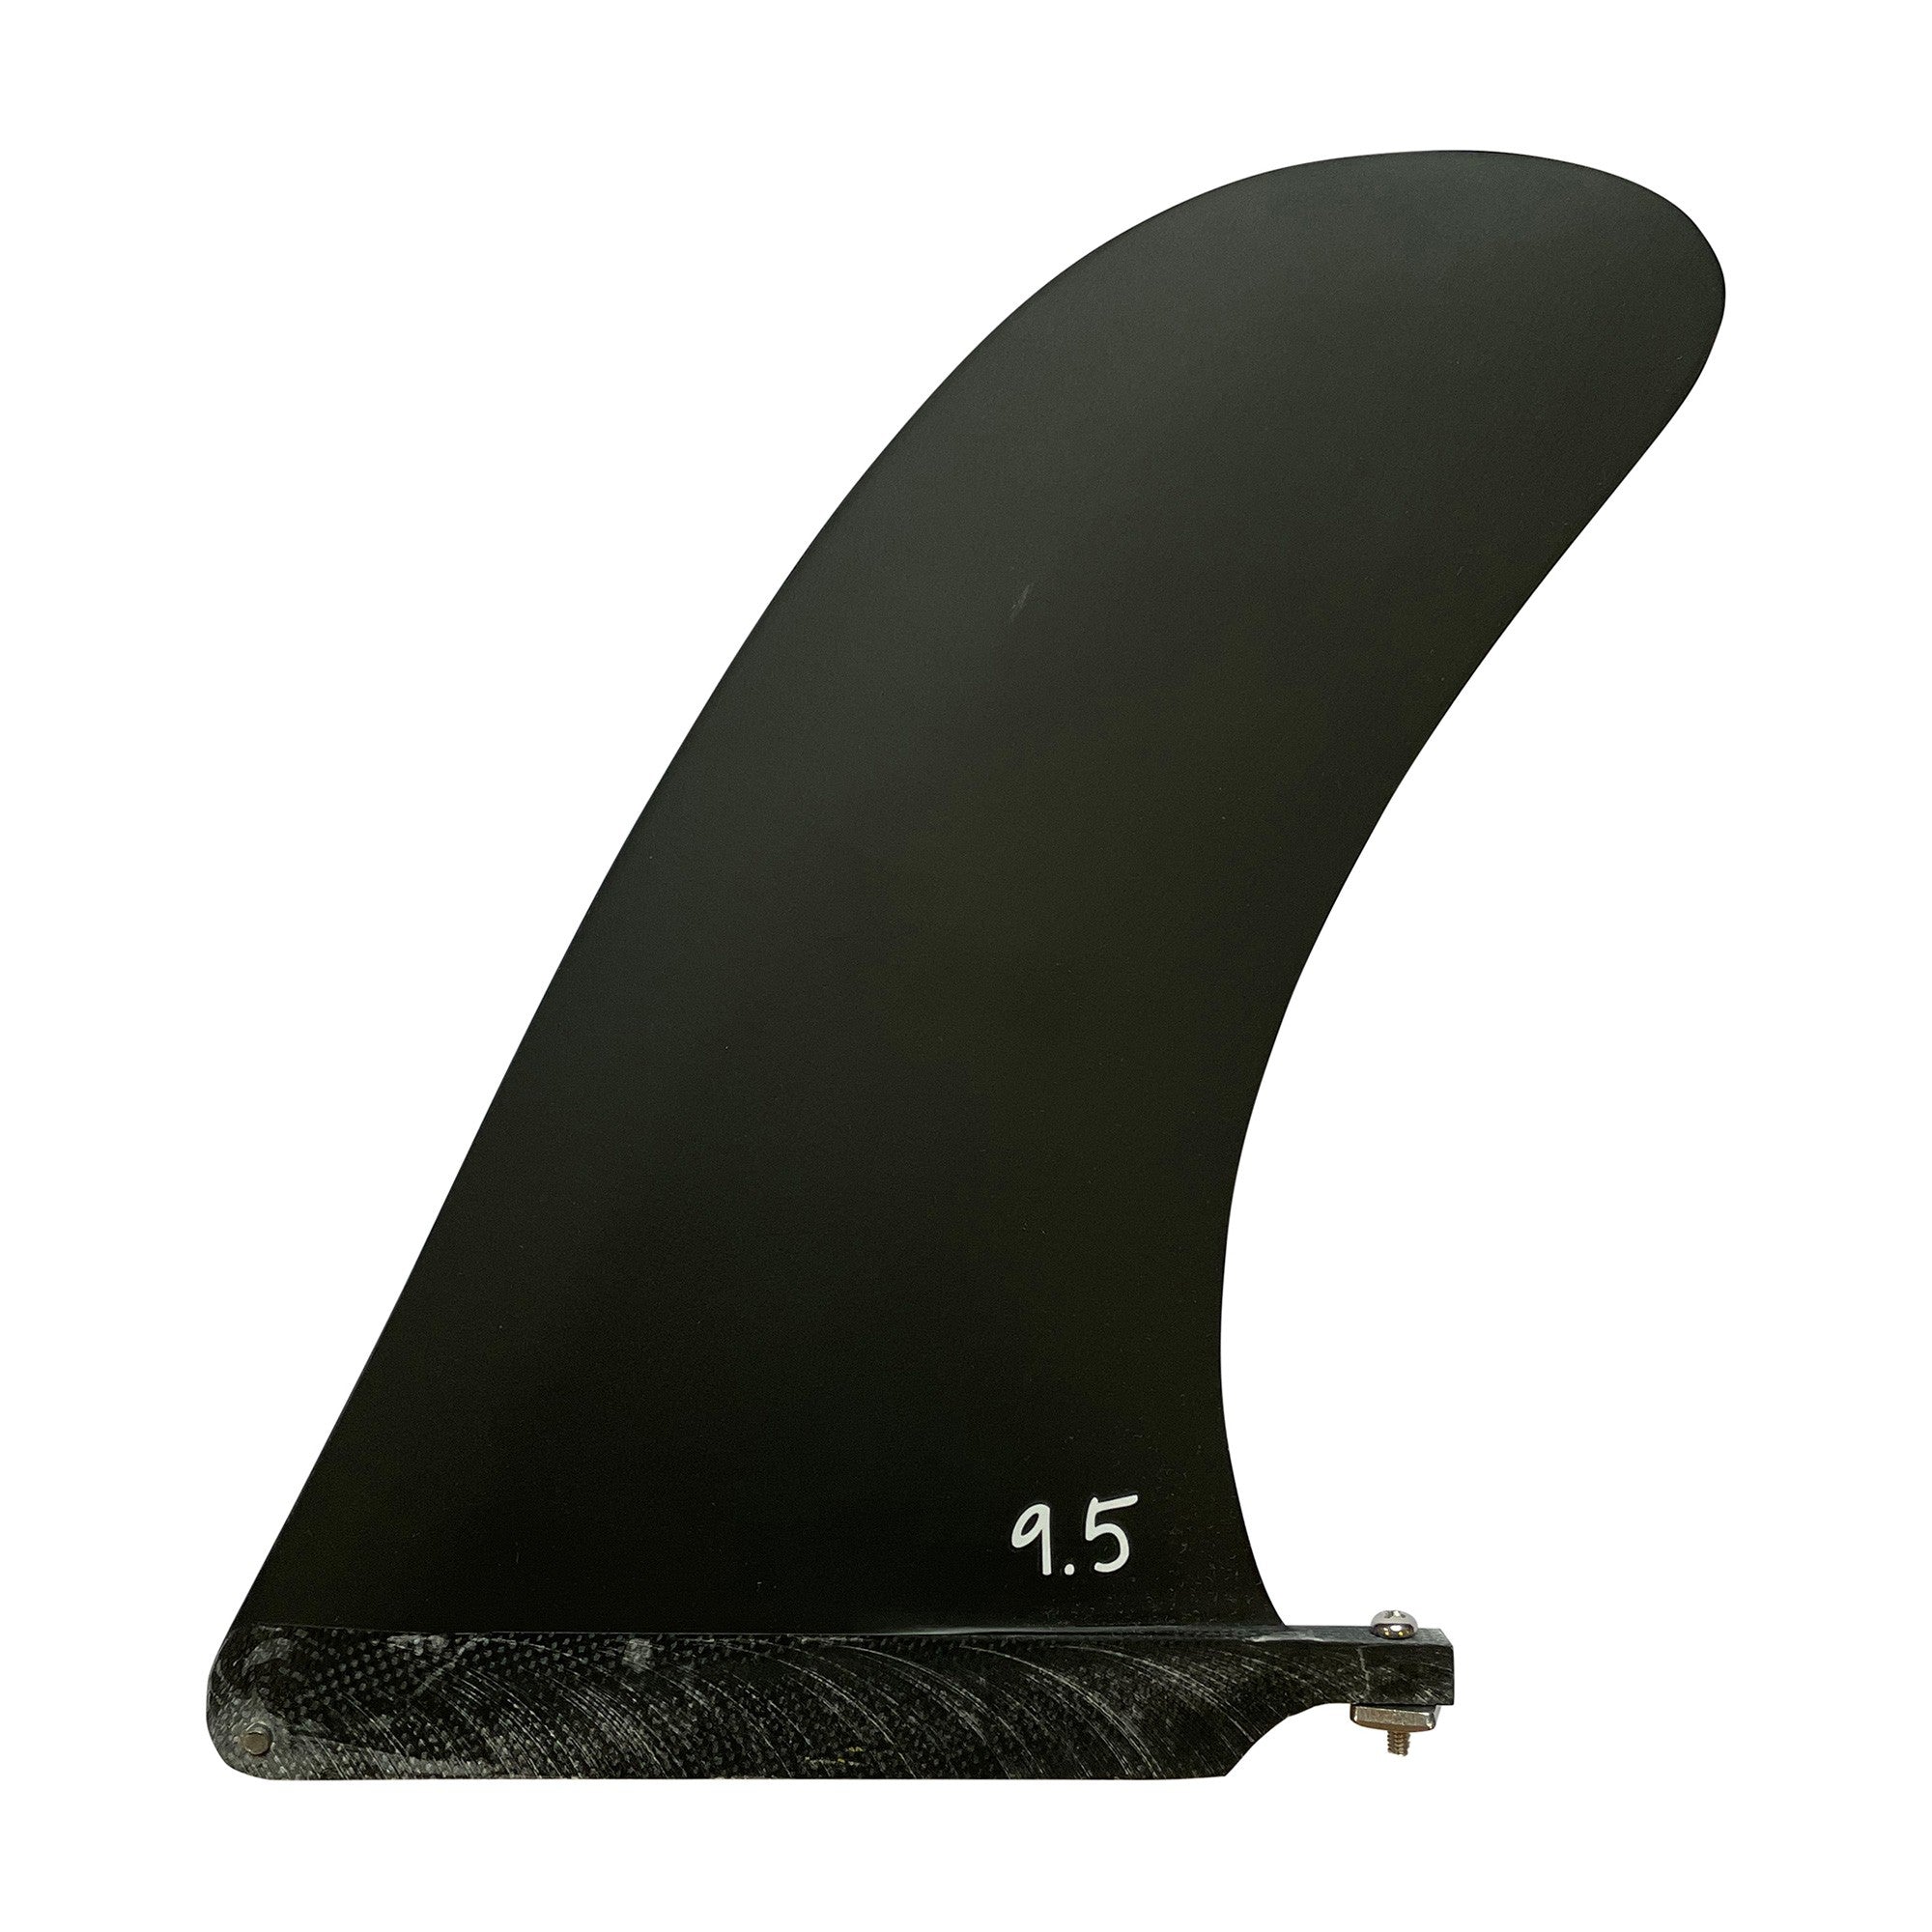 SISTEMA DE SURF - Aleta única de fibra de vidrio con pivote 9.5 (caja de EE. UU.) - Negro